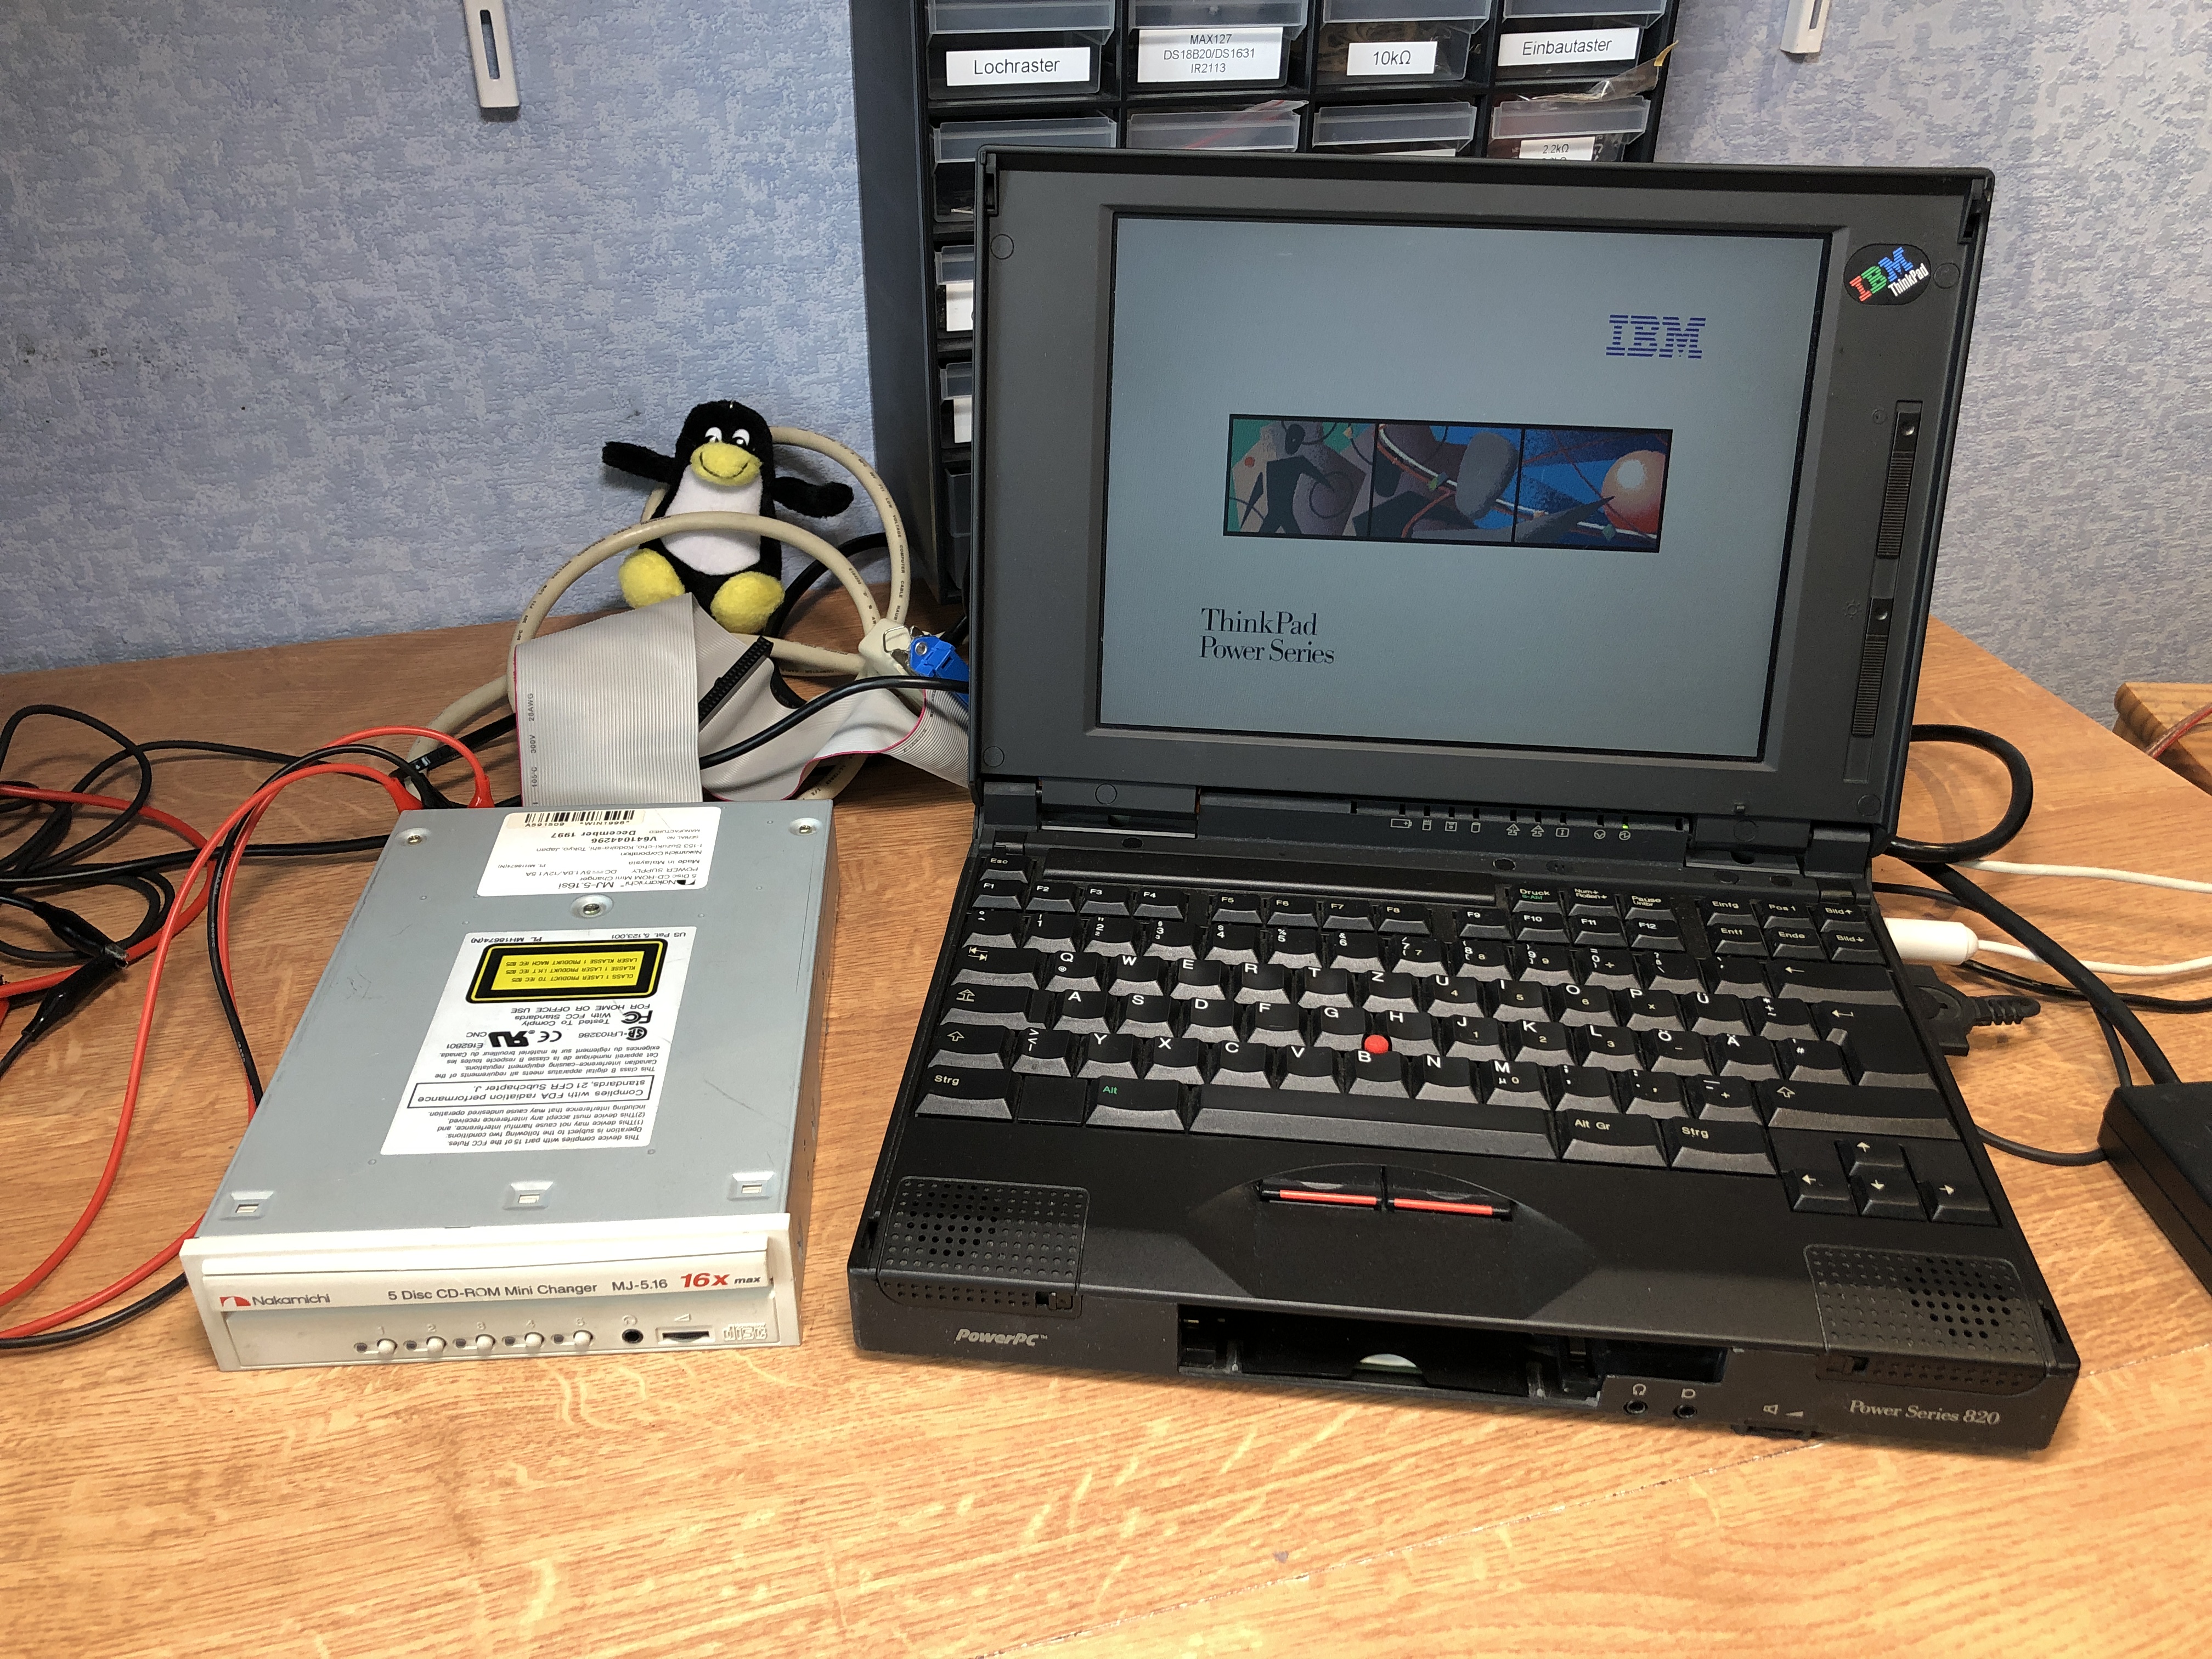 ThinkPad 820, next to a Nakamichi SCSI CD-ROM drive